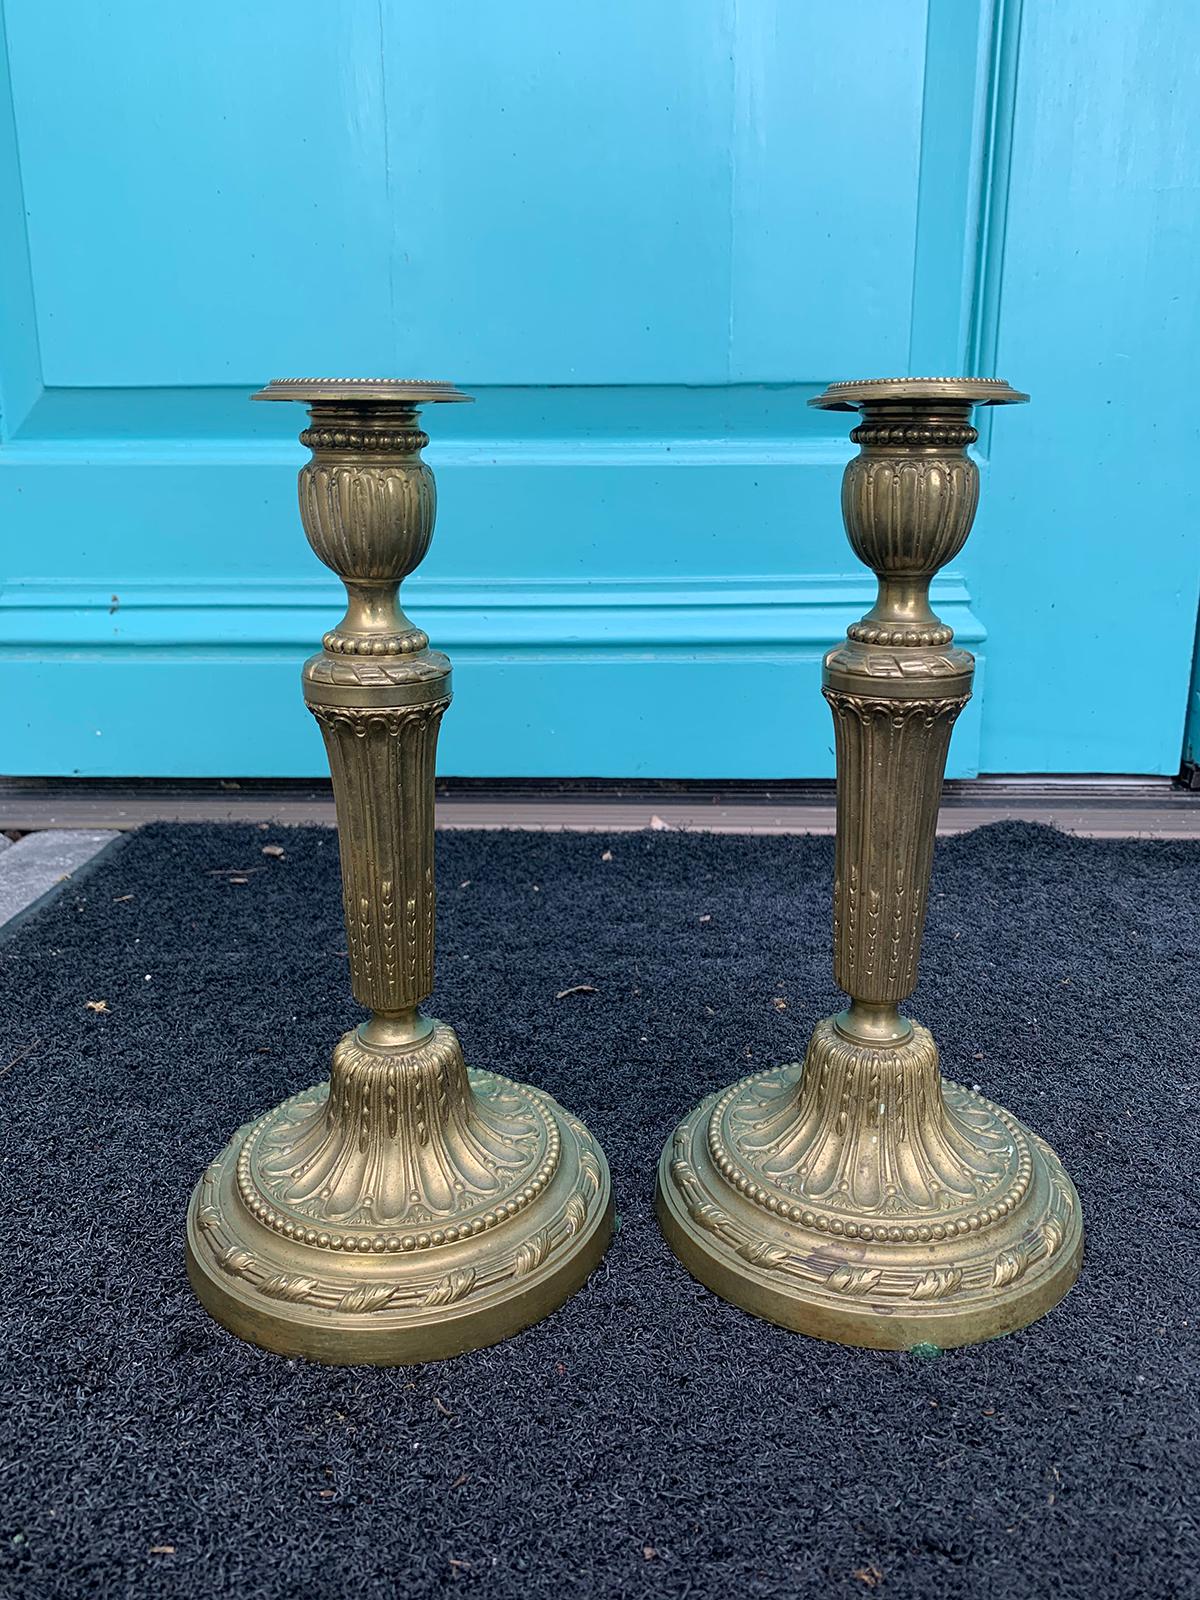 Pair of 19th century Louis XVI style bronze candlesticks.